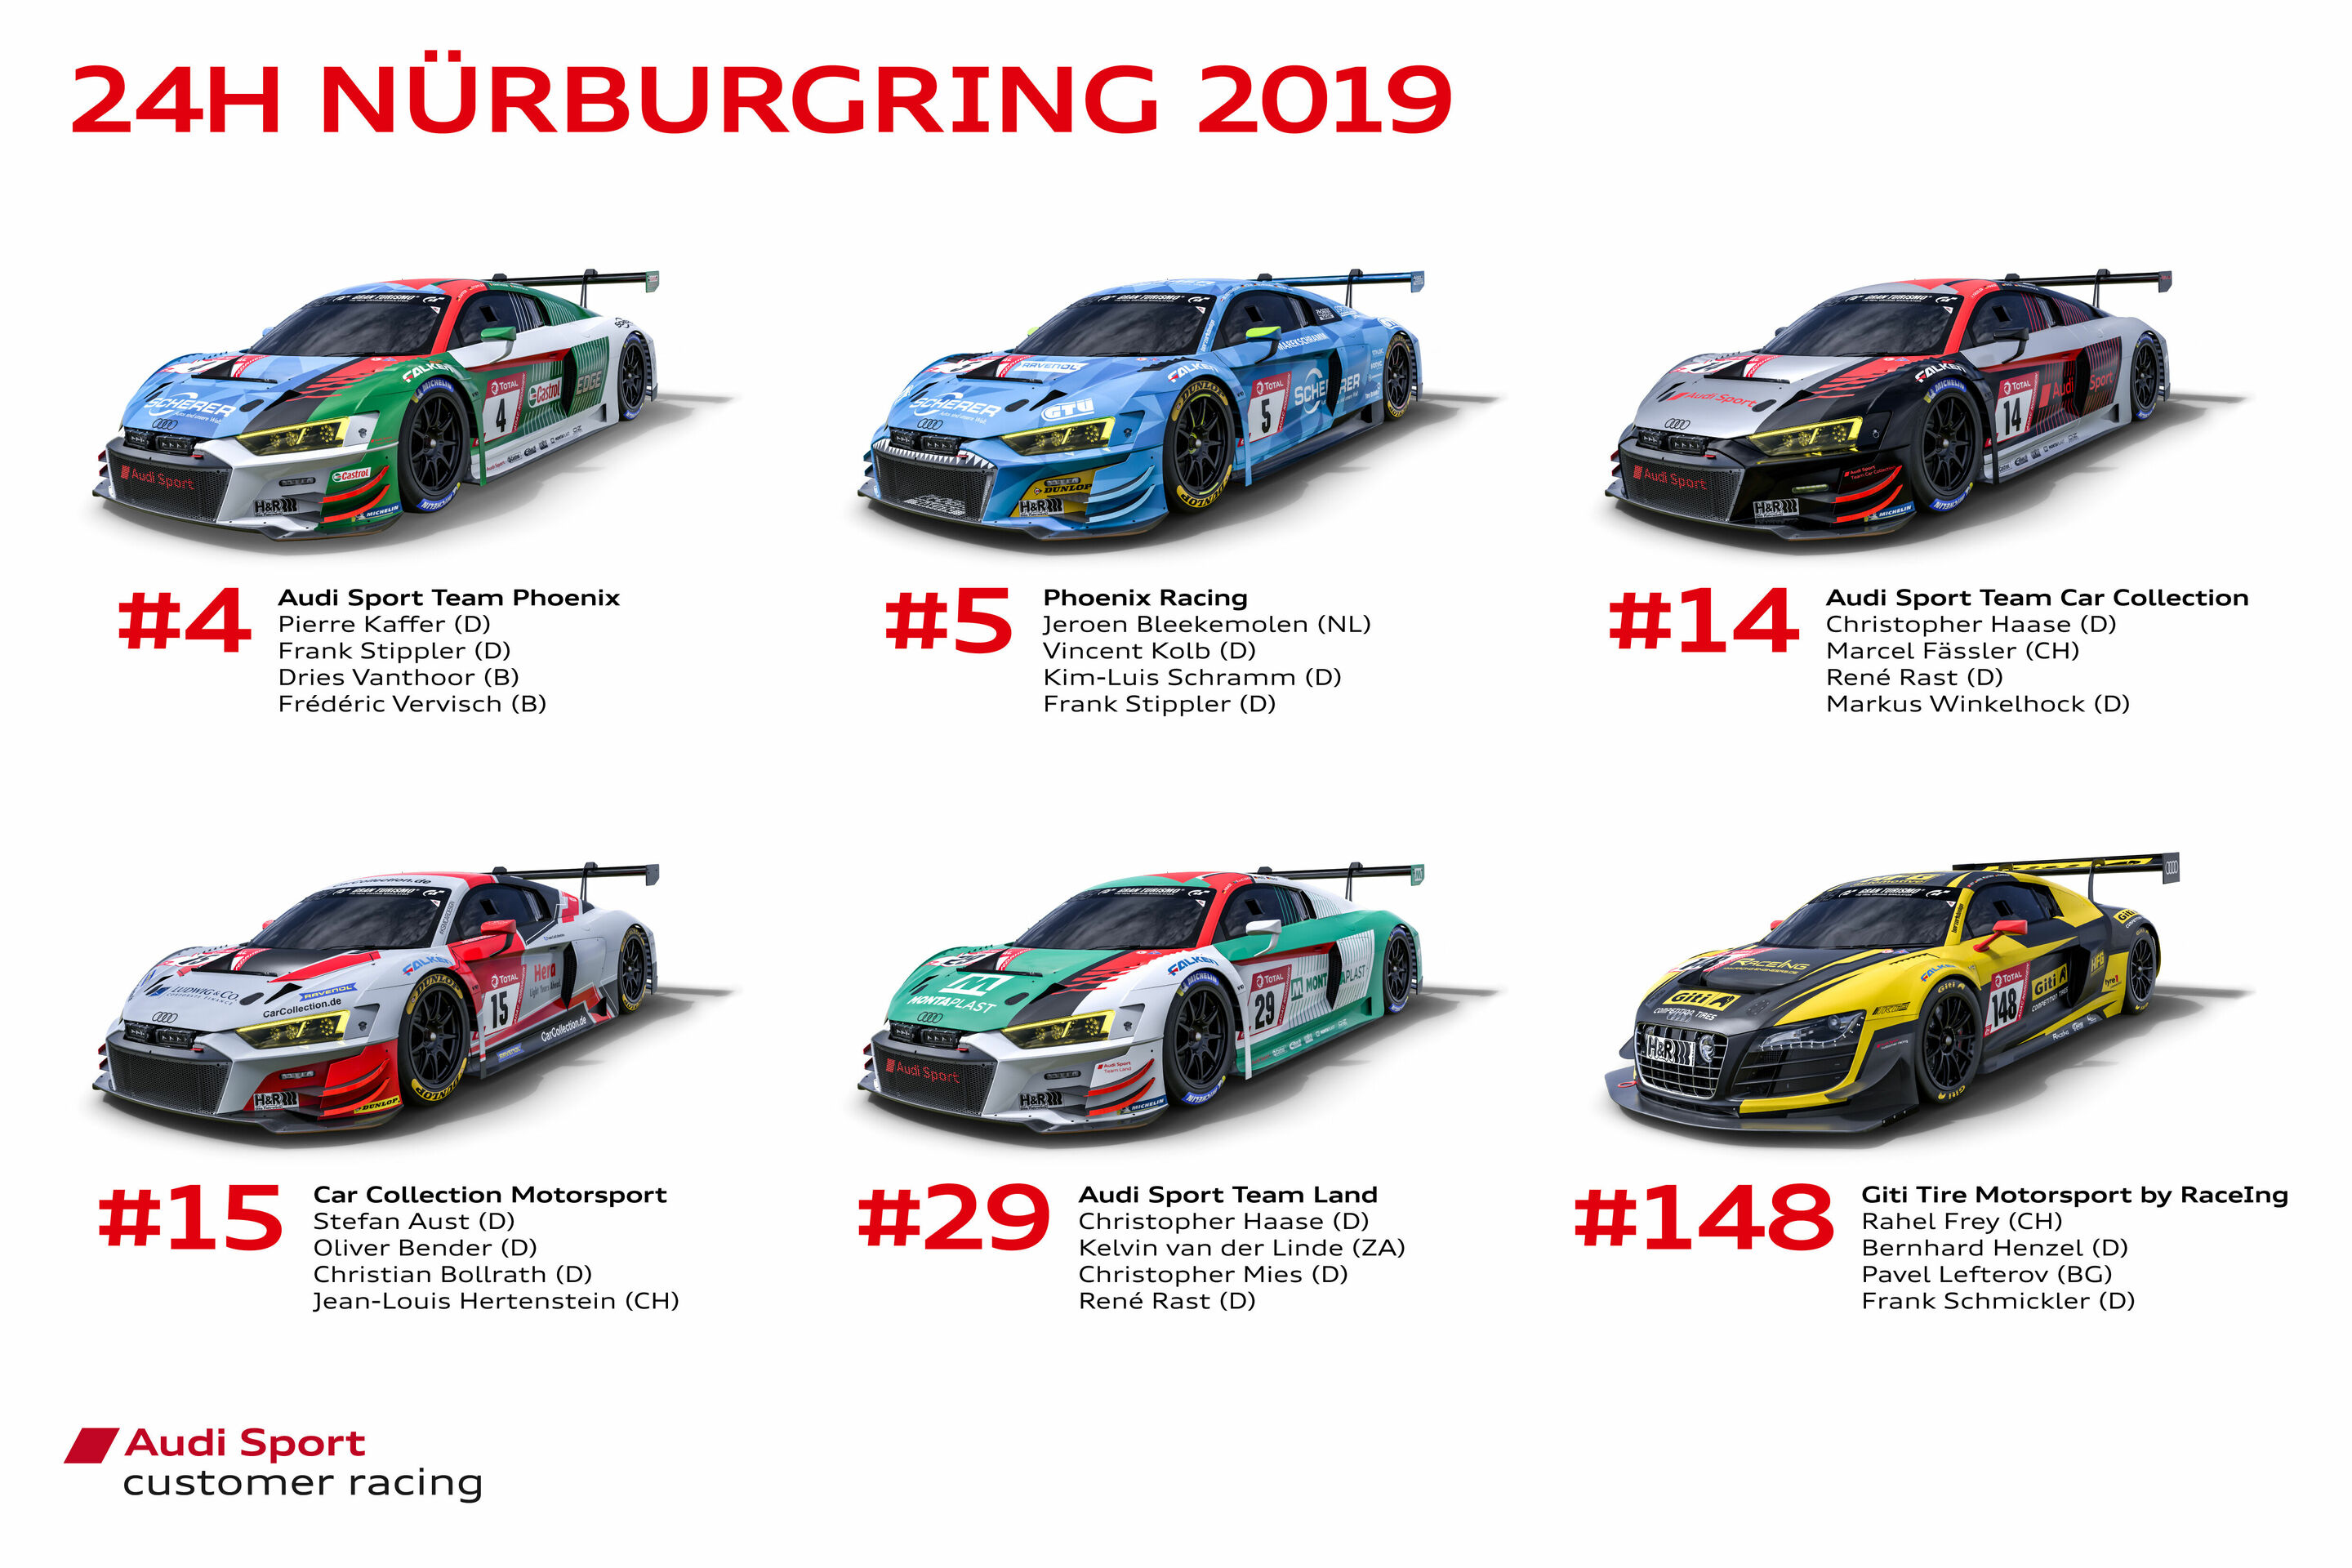 Audi Sport customer racing will fünften Sieg auf dem Nürburgring Audi MediaCenter